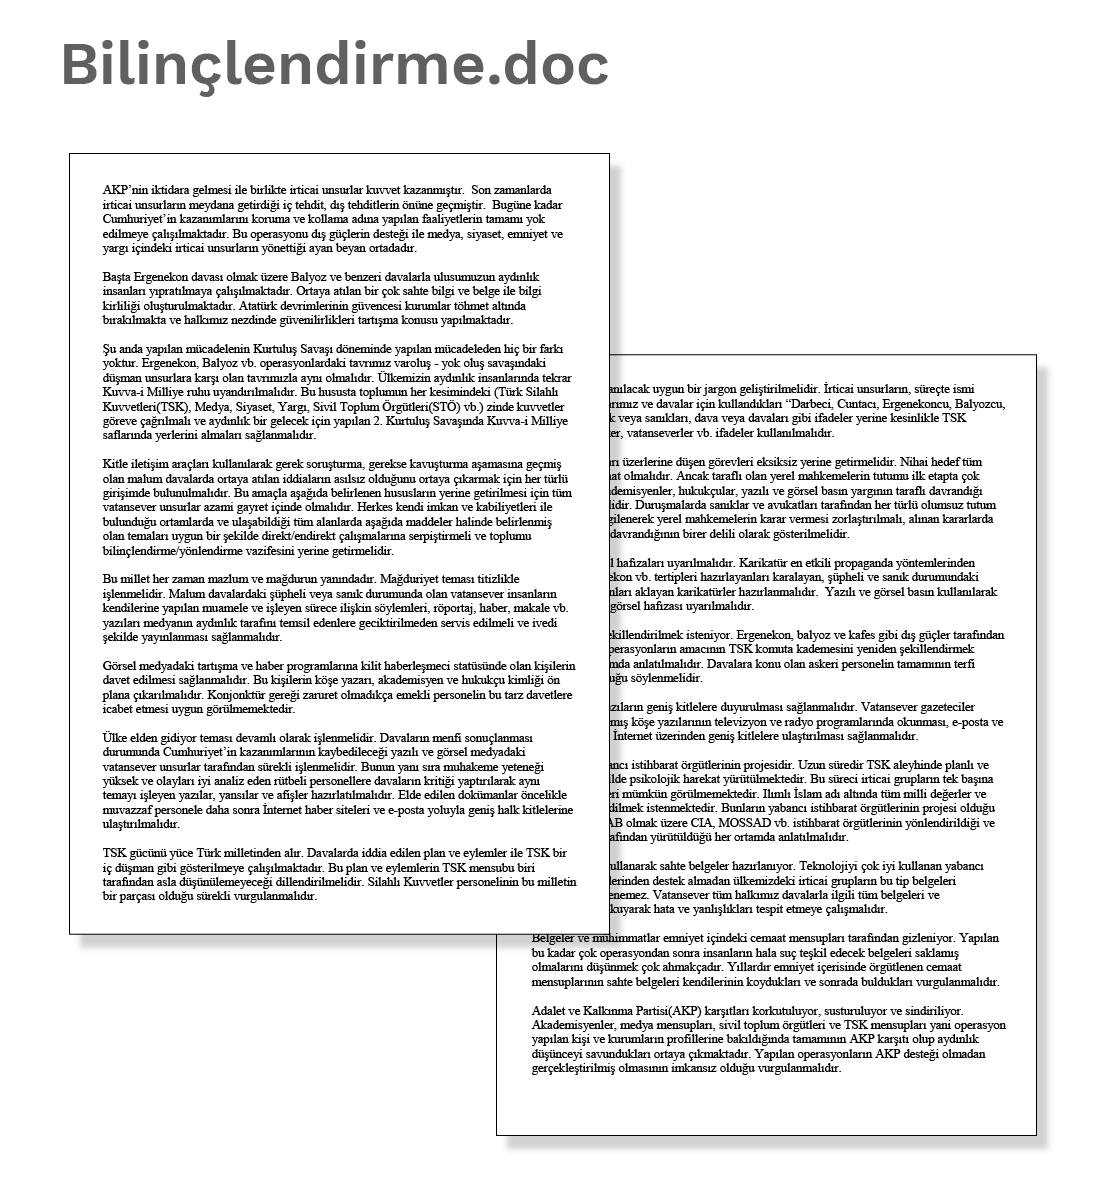 Document 1: Bilinçlendirme.doc